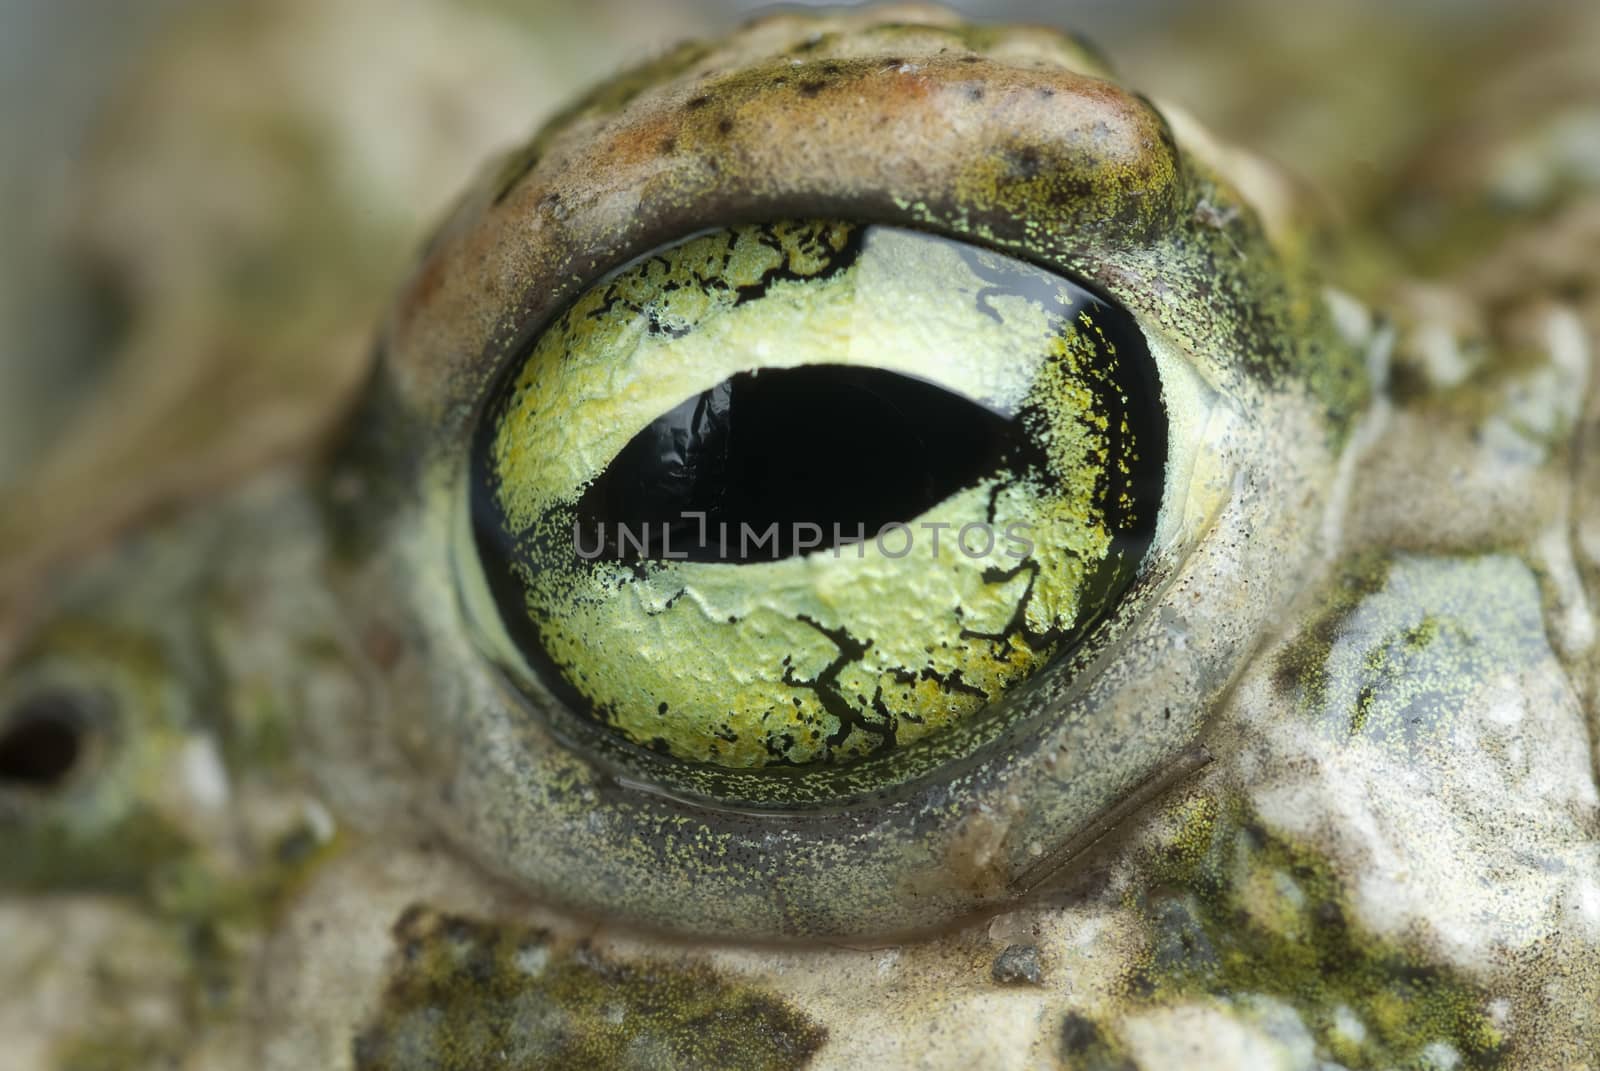 Spadefoot toad, Pelobates cultripes, amphibian by jalonsohu@gmail.com